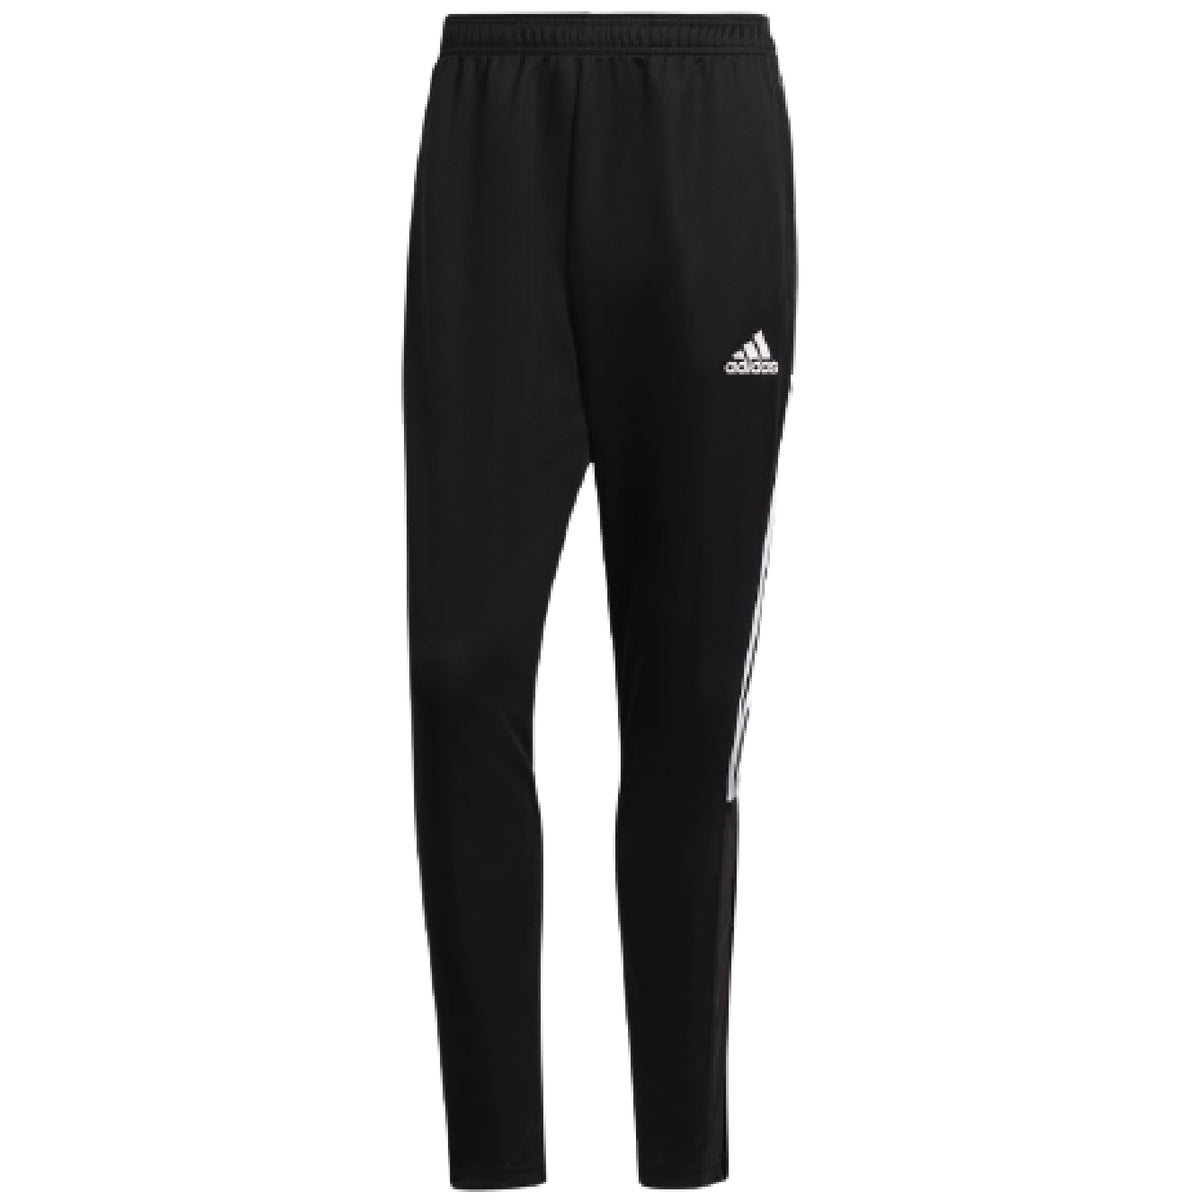 Black/White 21 – Tiro Zone USA Pants- adidas Training Soccer